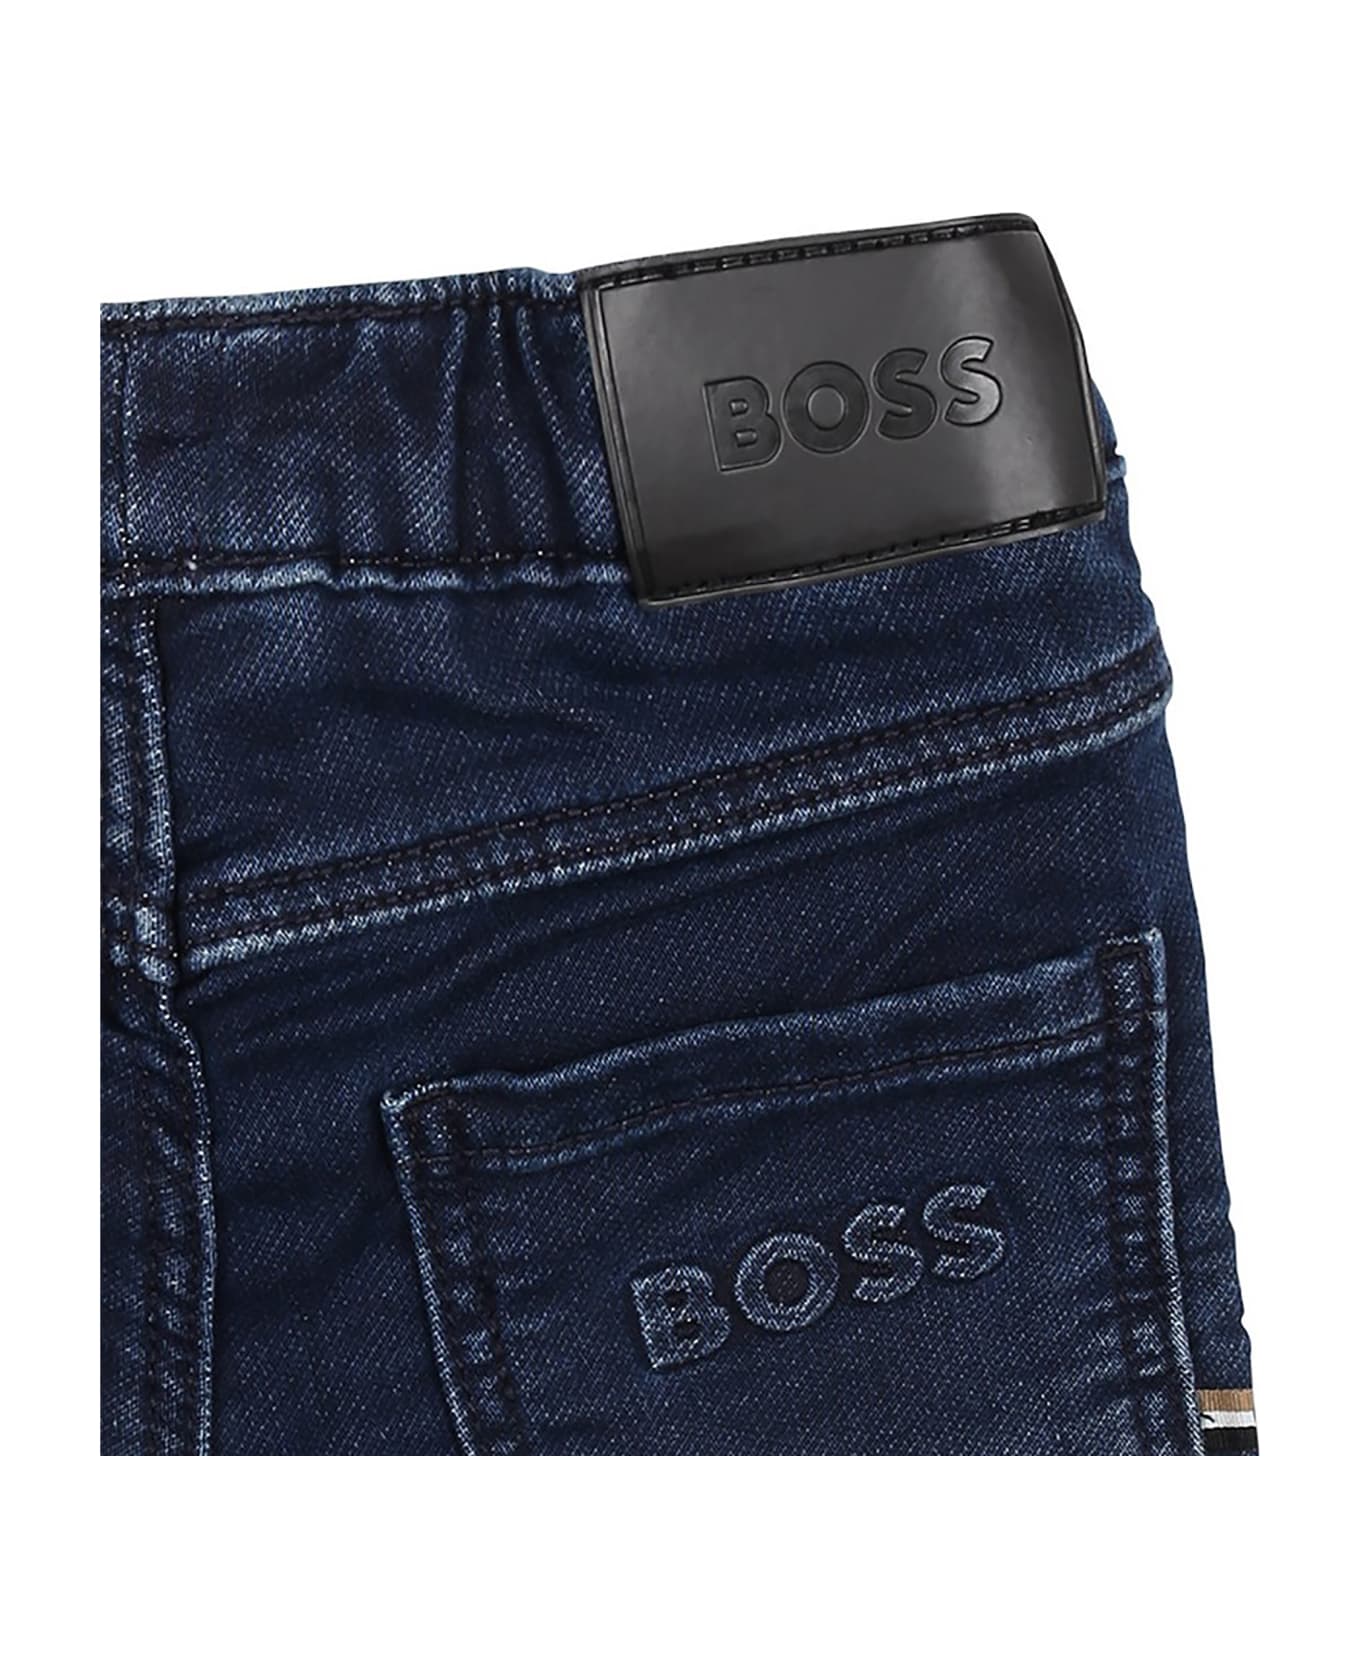 Hugo Boss Denim Shorts For Baby Boy With Logo - Denim ボトムス